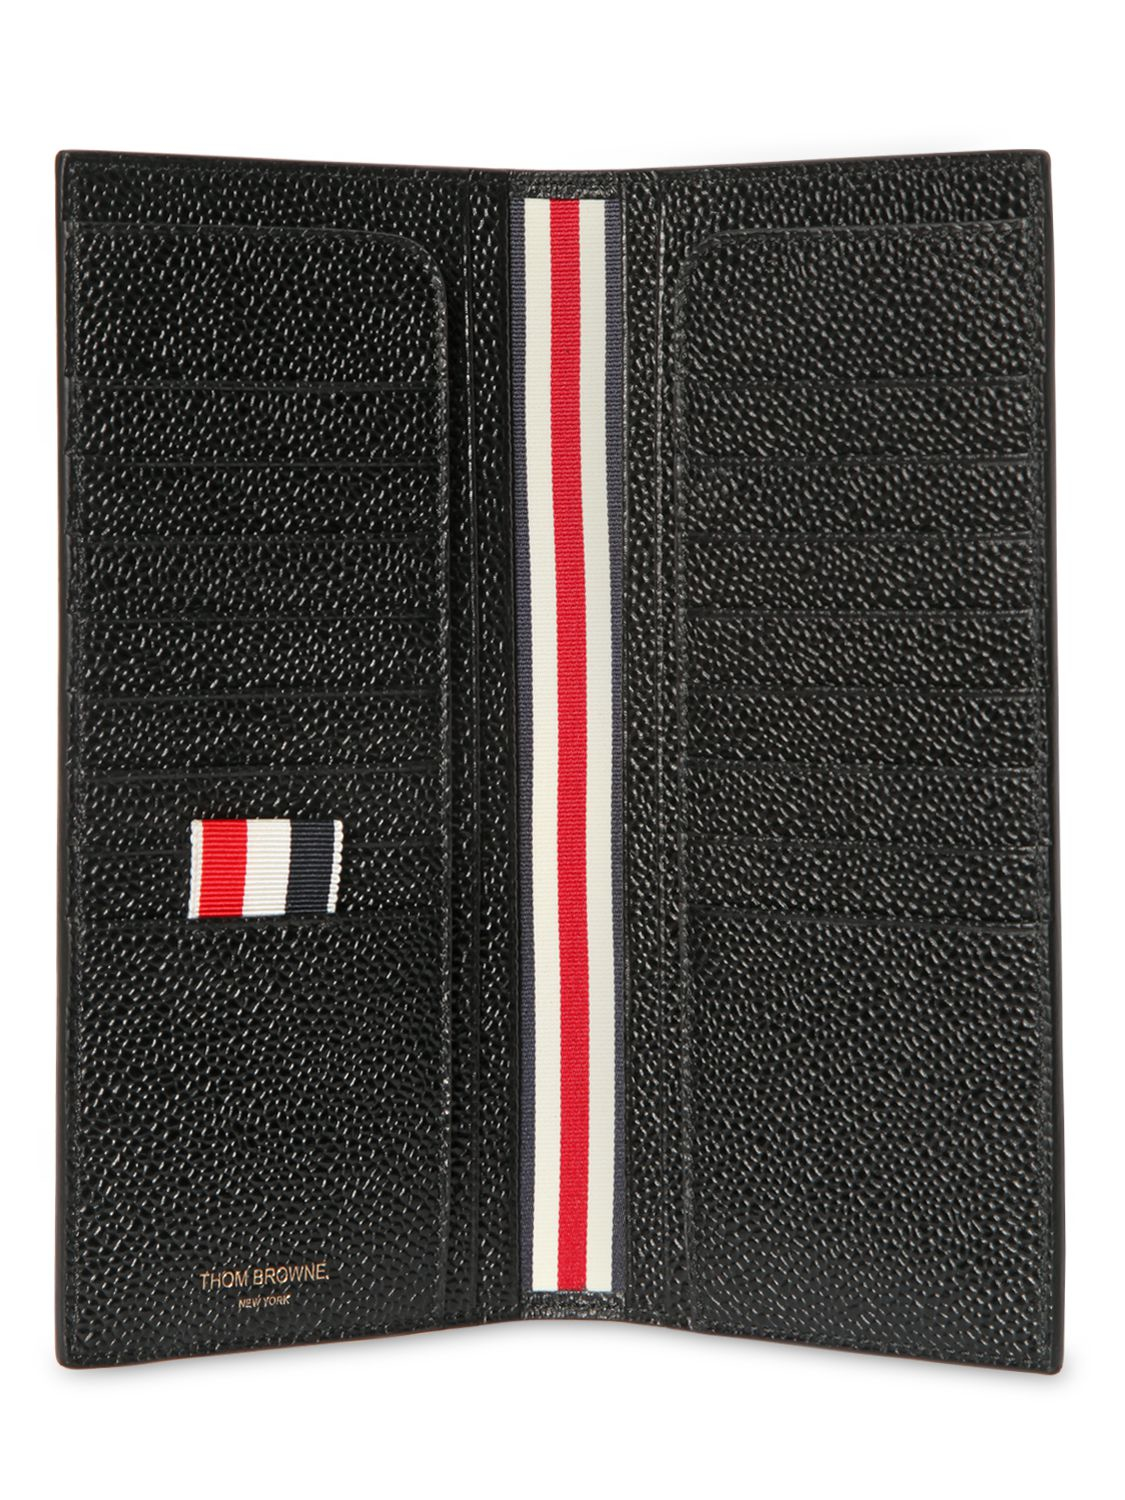 Thom Browne Pebbled Leather Vertical Wallet in Black for Men - Lyst